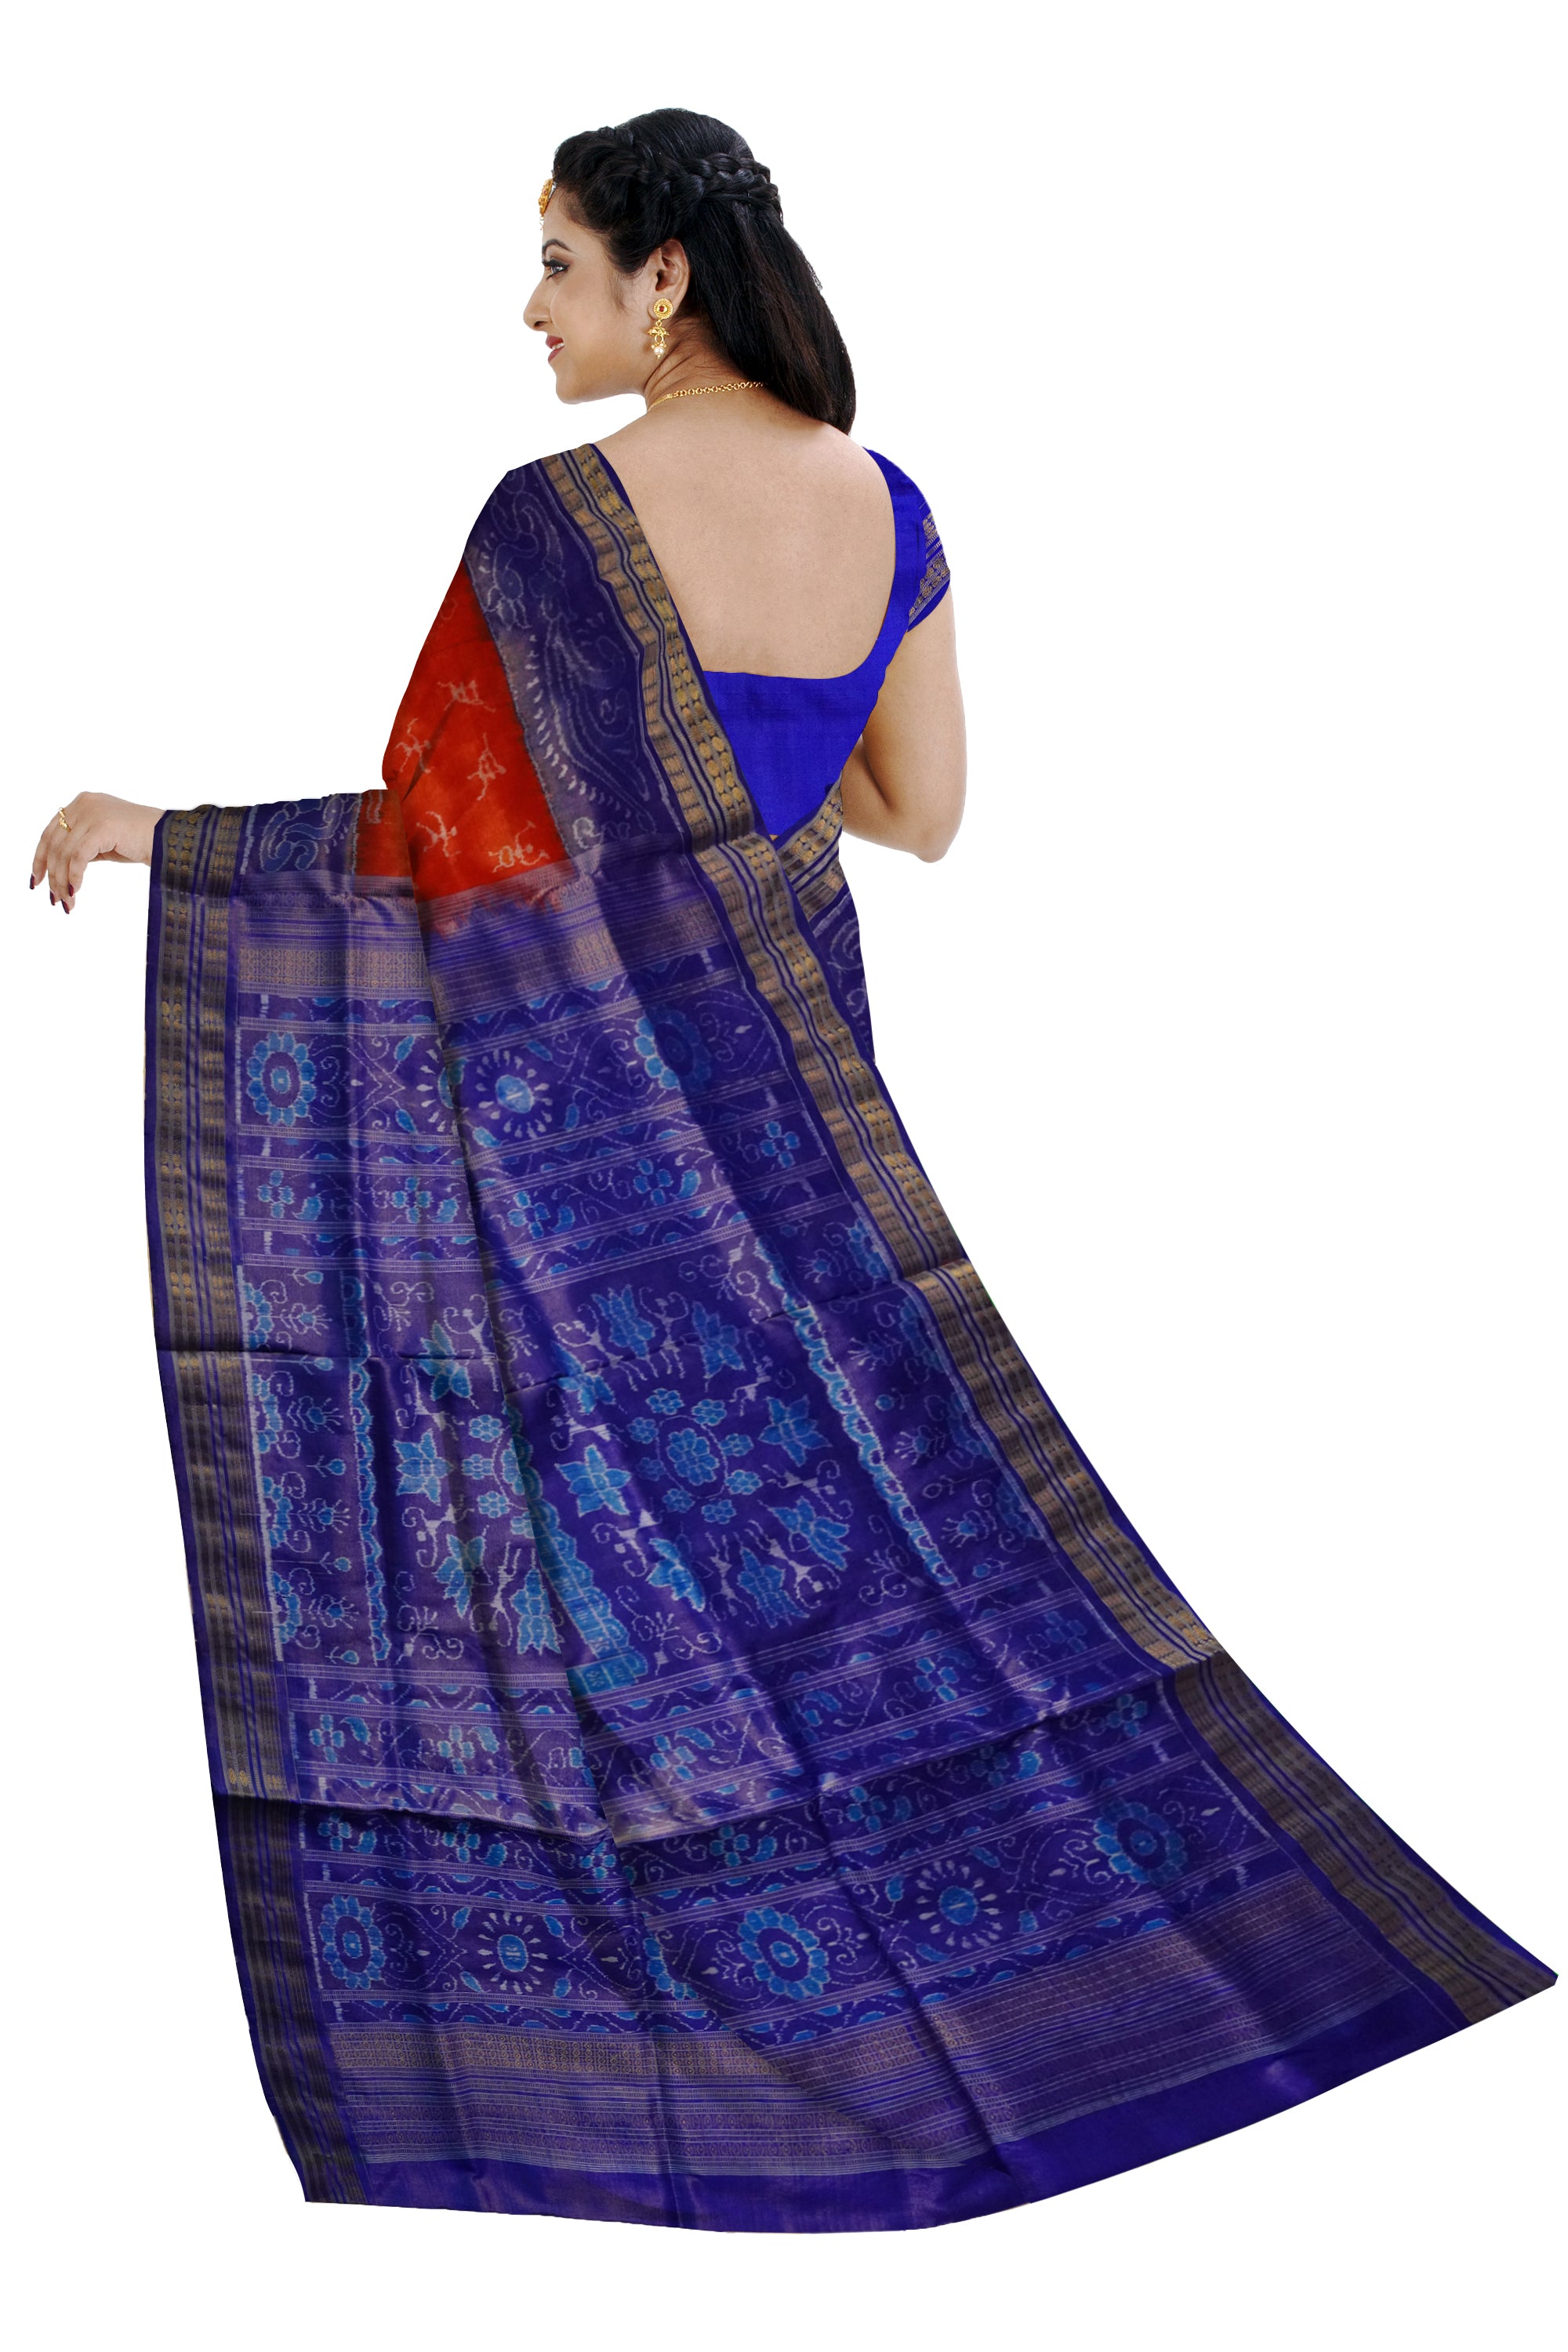 Orange and Blue color terracotta with odishi dance pattern sambalpuri Tissue silk pata saree . - Koshali Arts & Crafts Enterprise